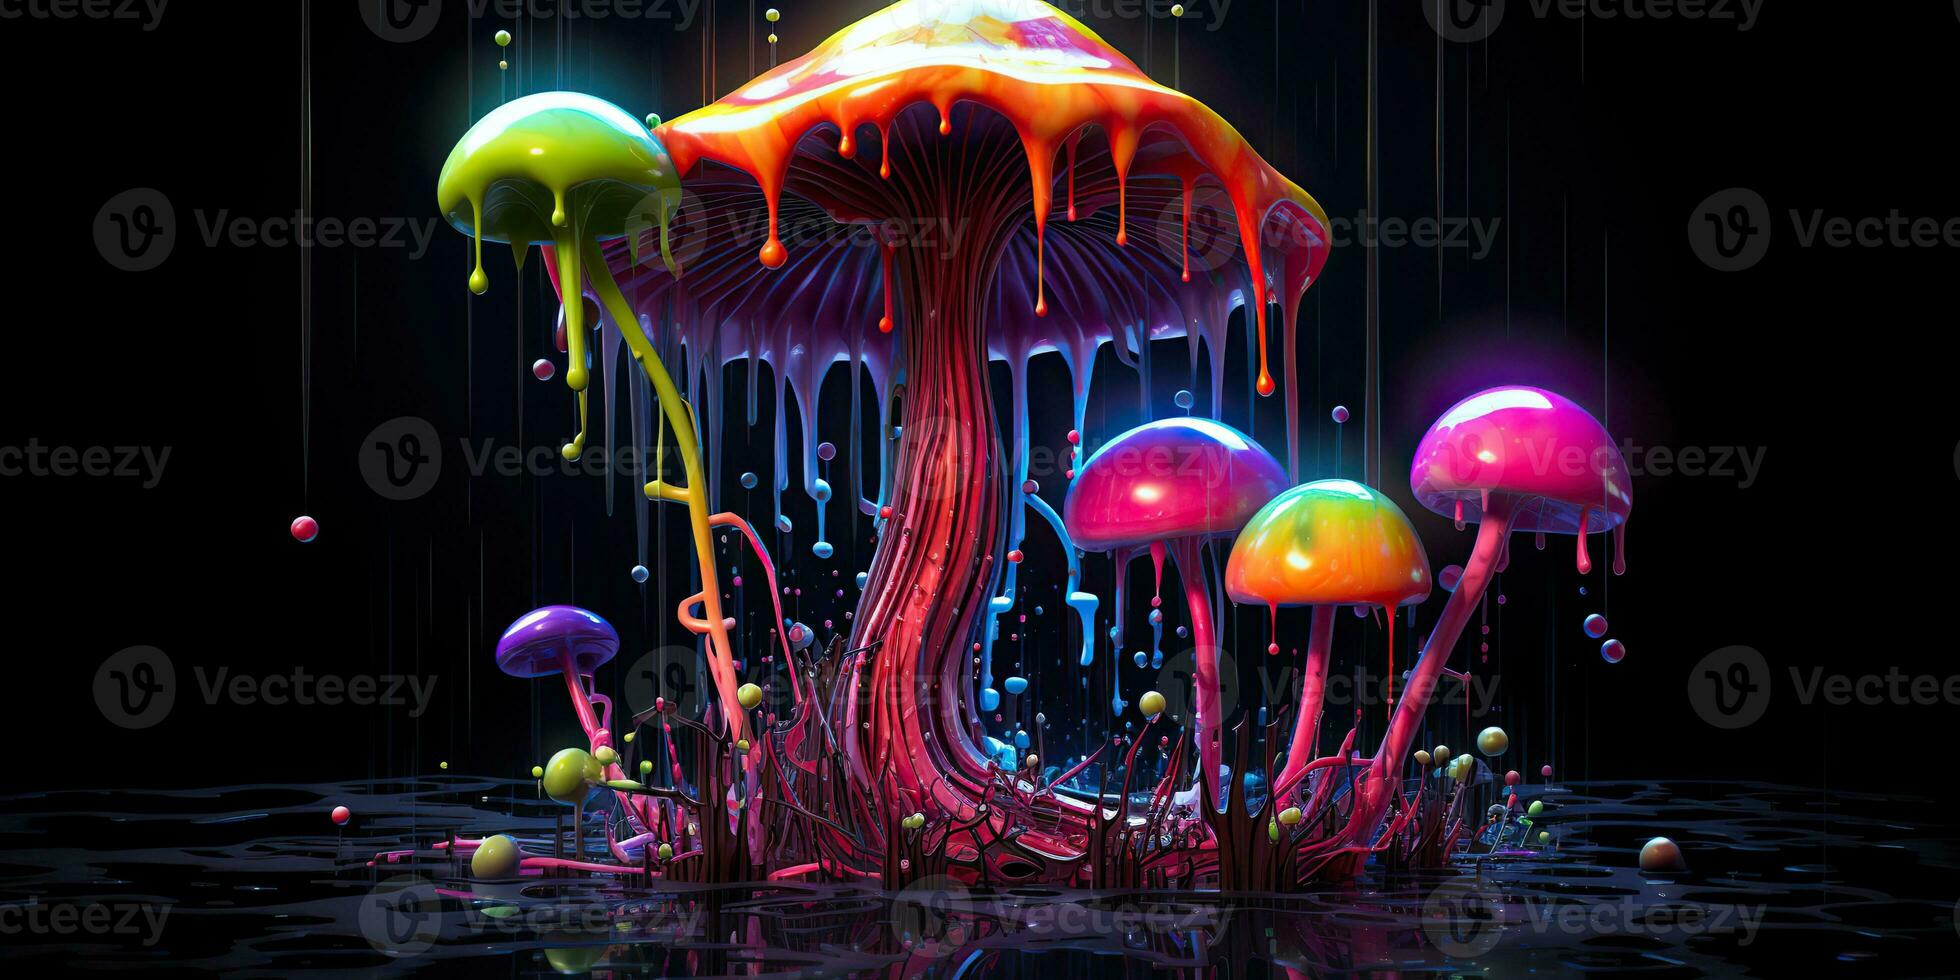 ai genererad. ai generativ. neon ljus ljus dra måla bläck konst svamp i psychedelic stil. grafisk konst foto